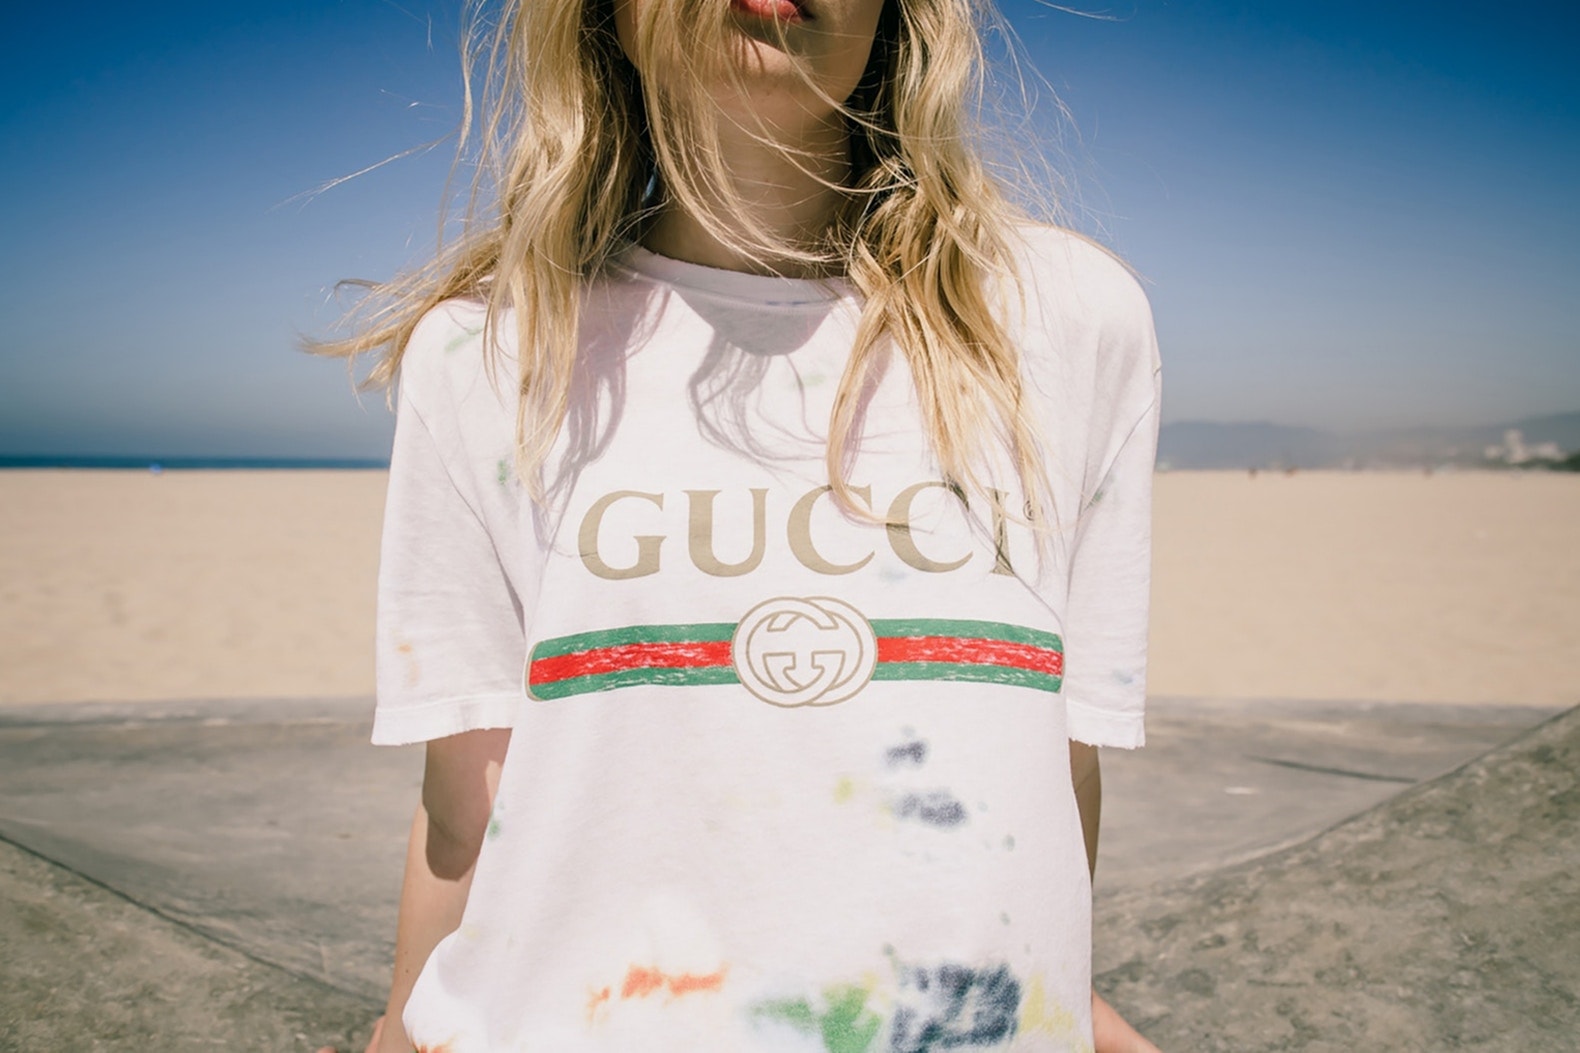 Gucci Hottest Brand in the World BoF